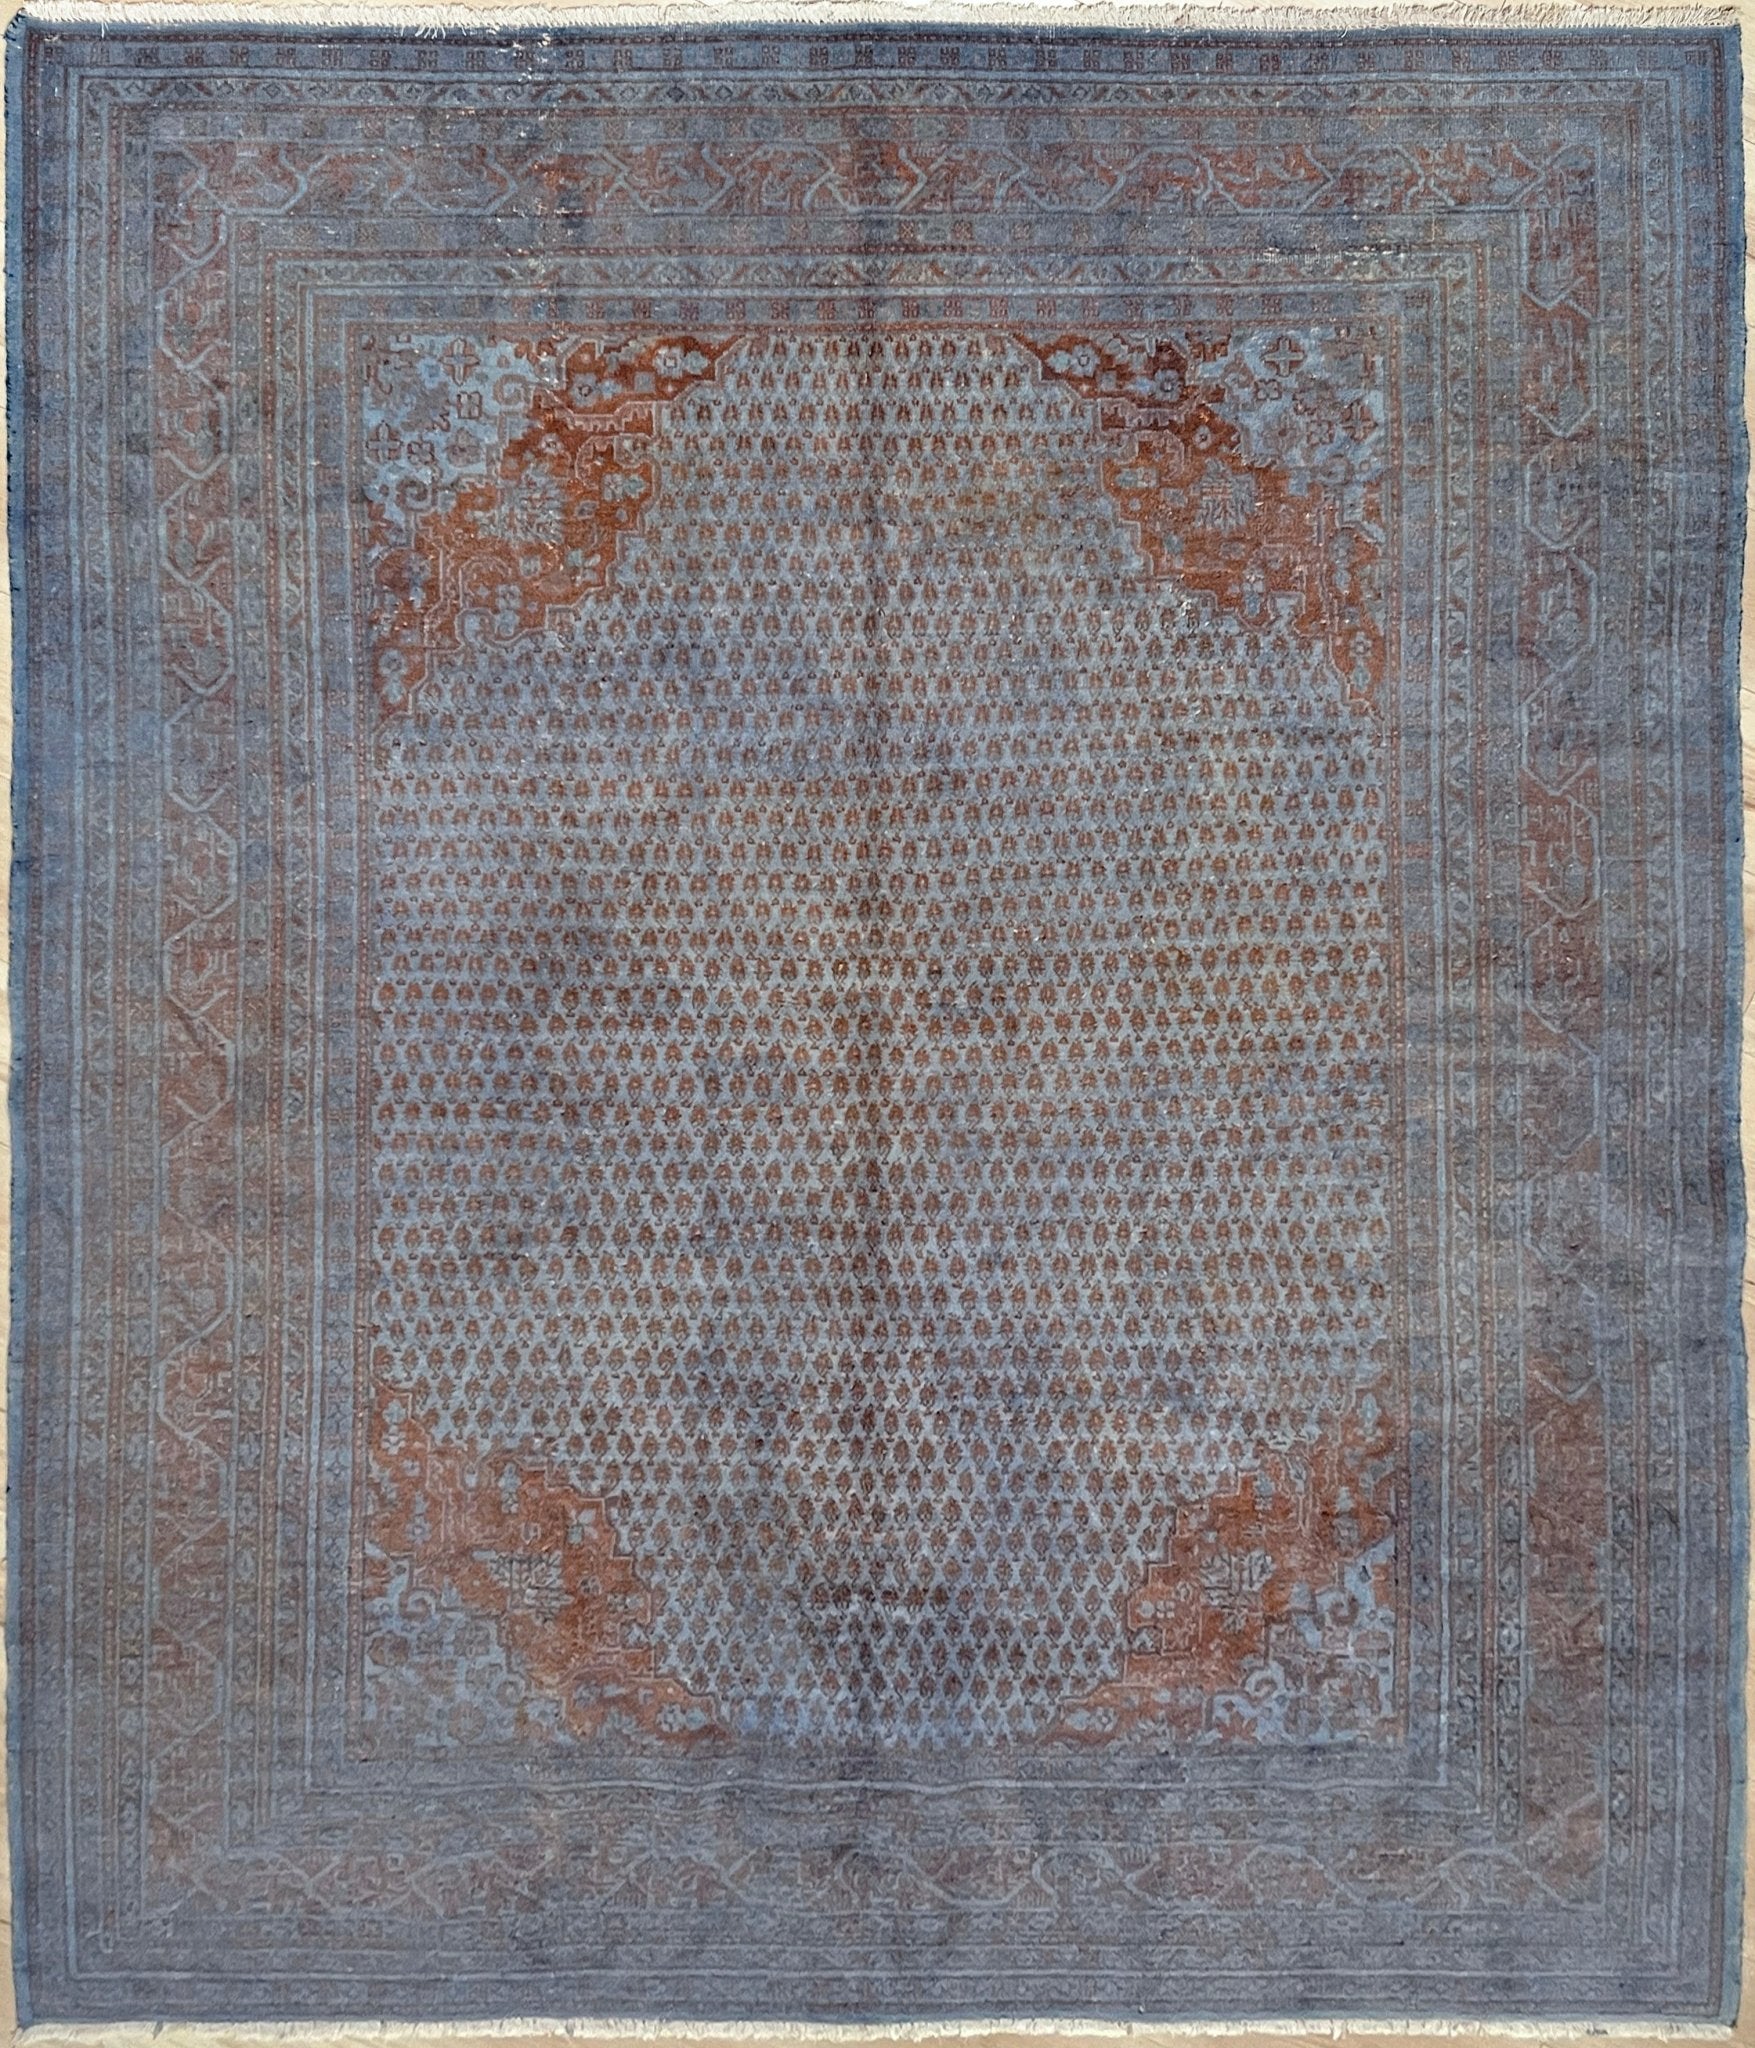 Blue overdyed turkish rug. Muted wool handmade Turkish rug store SF Bay Area. Buy rug palo alto, berkeley, los altos berkeley